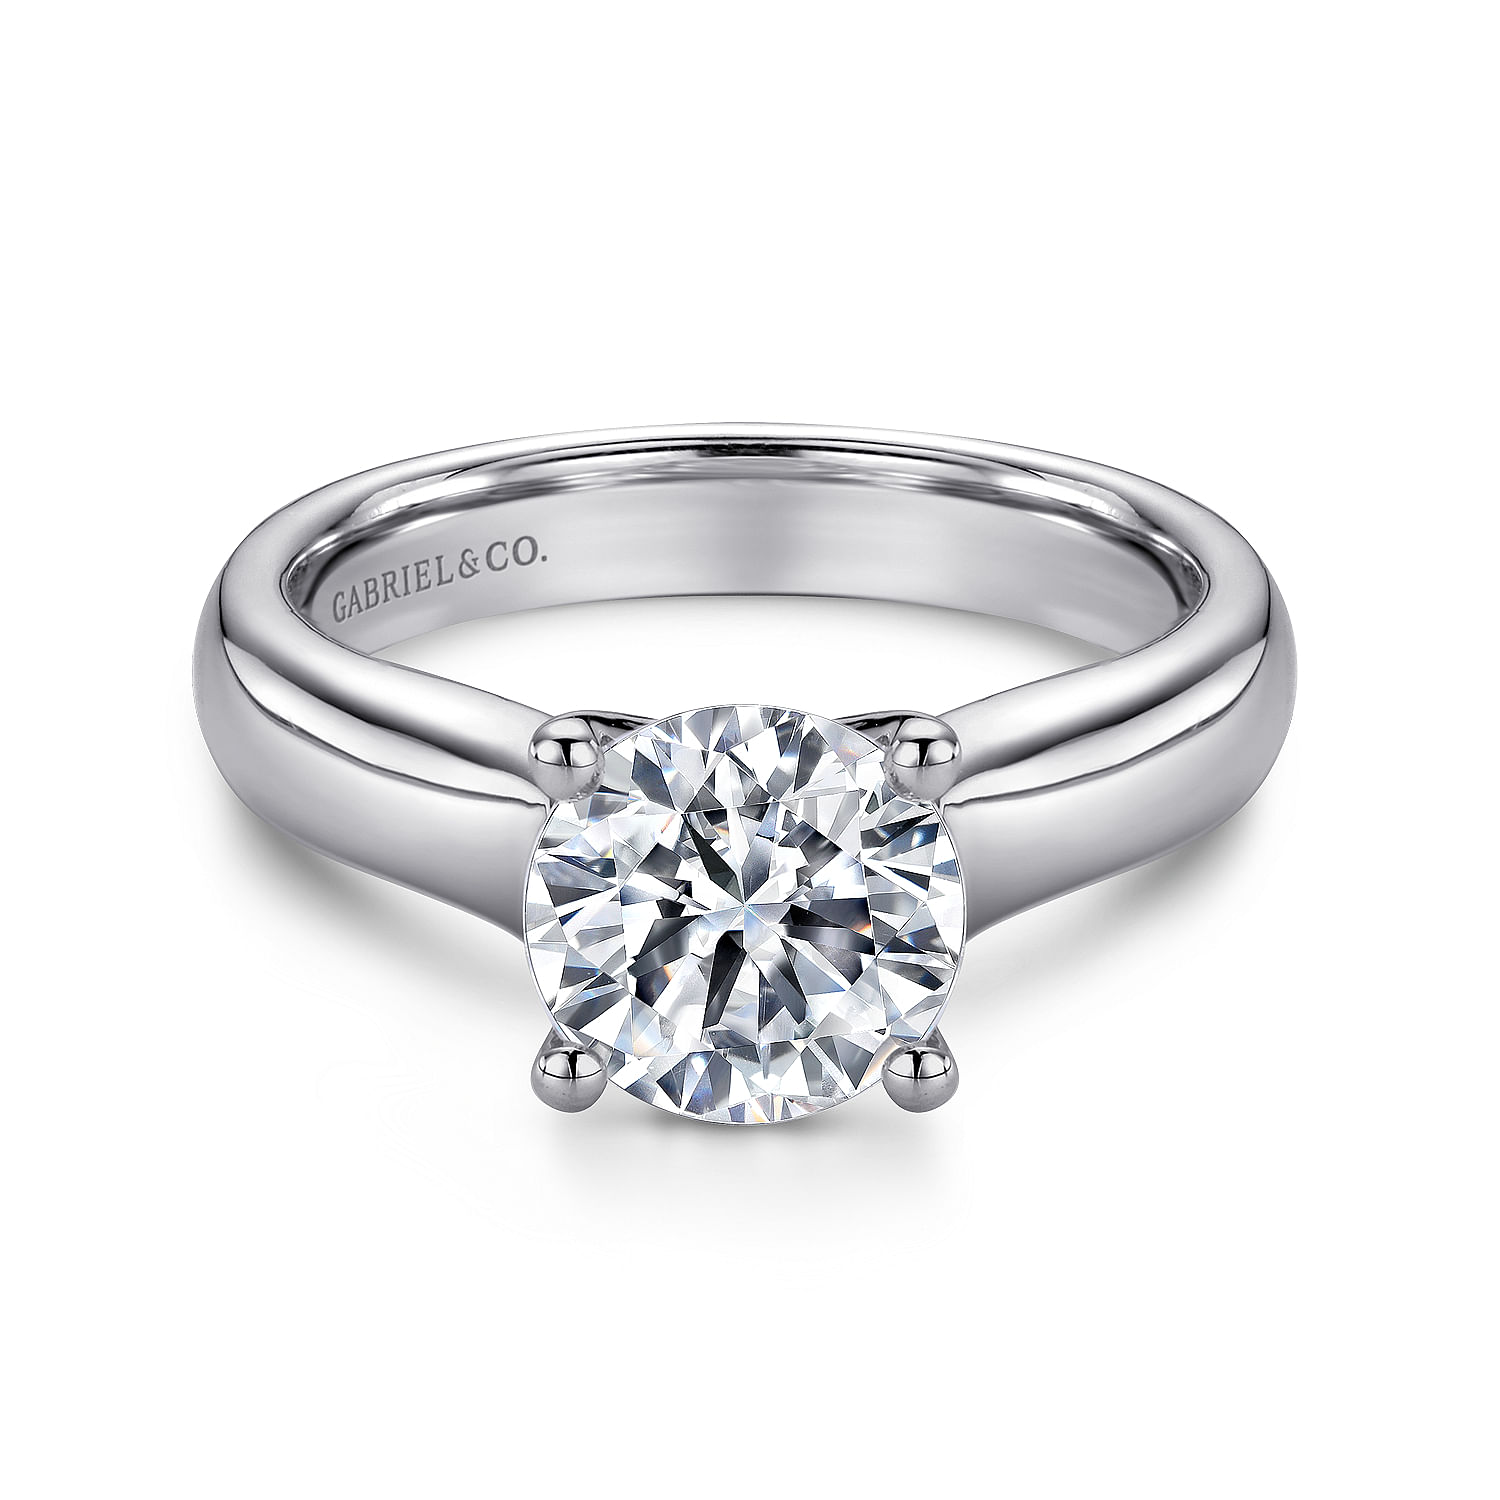 Helen---14K-White-Gold-Round-Diamond-Engagement-Ring1